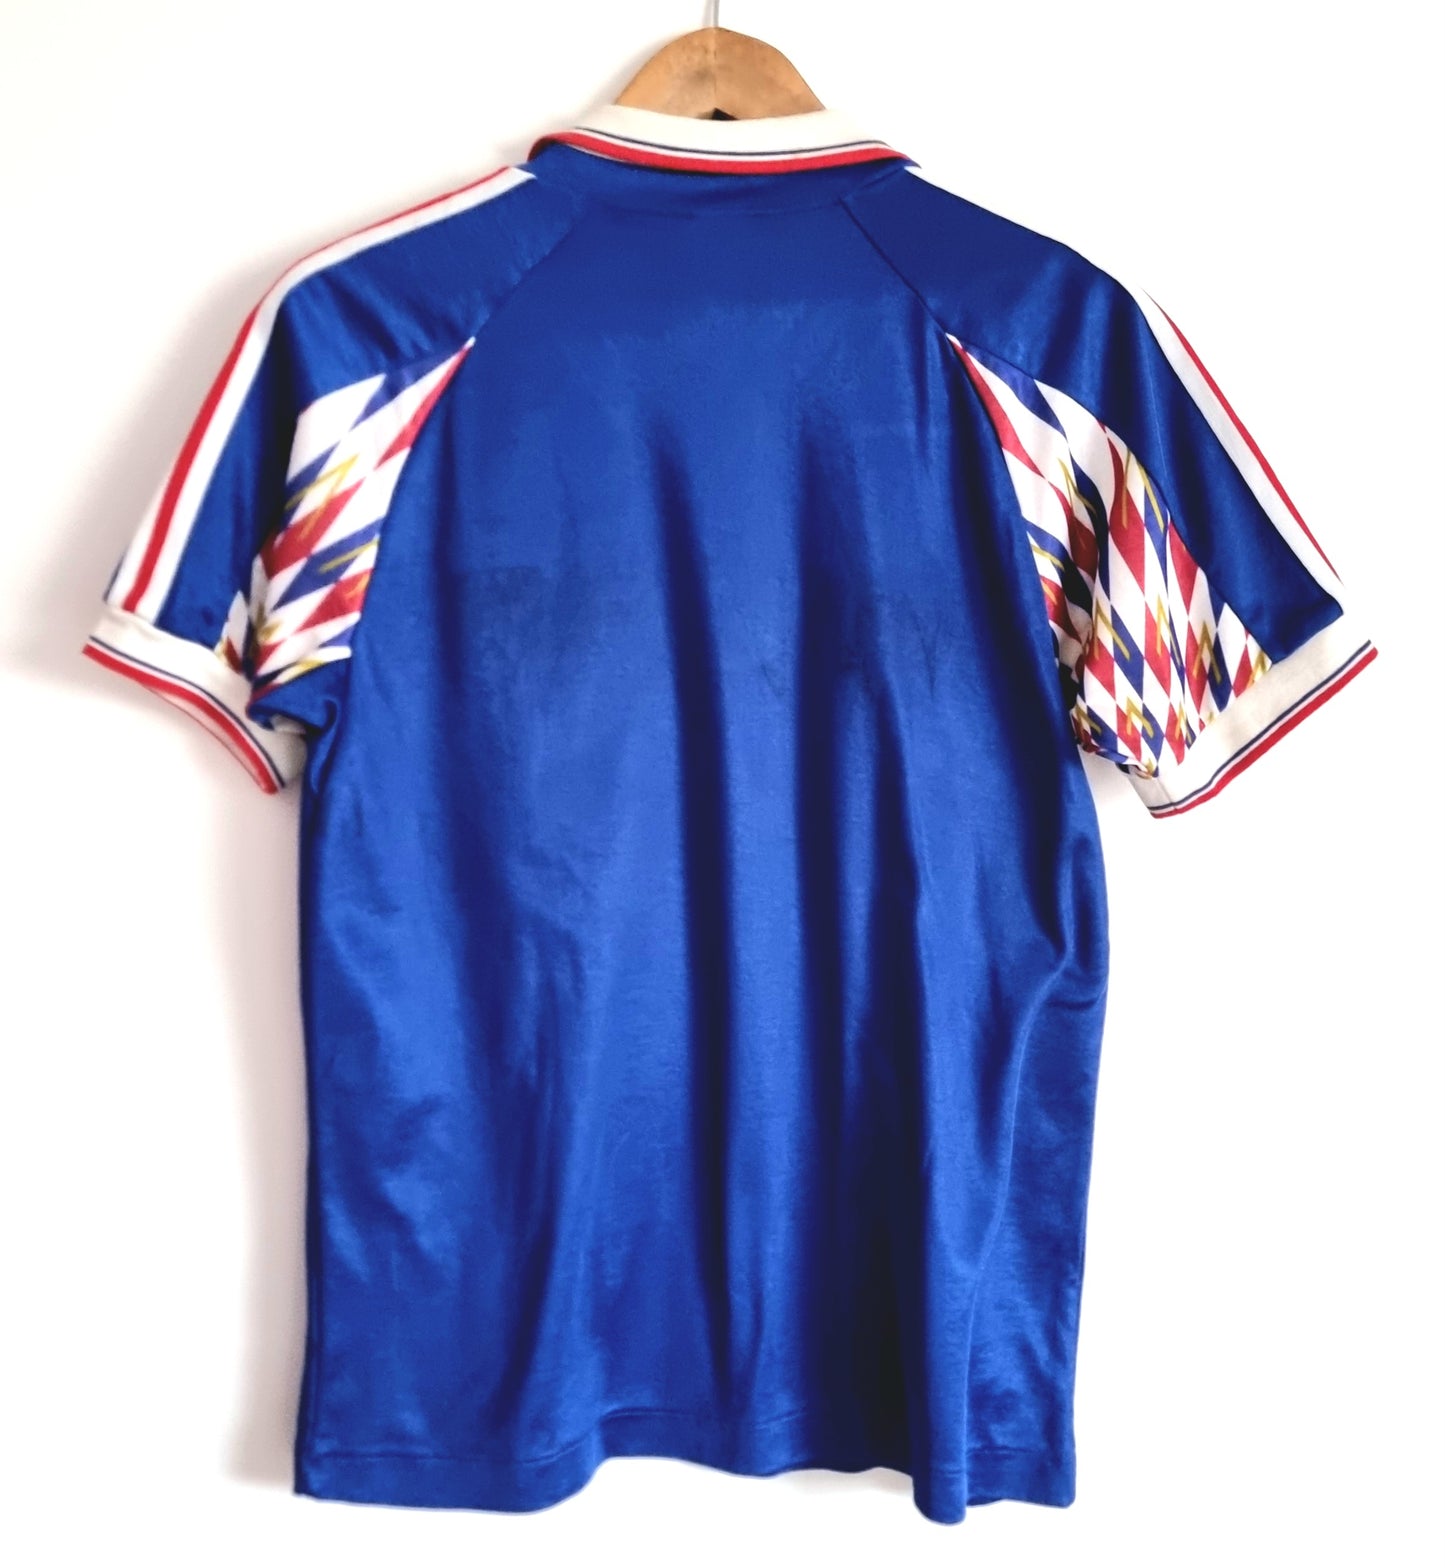 Adidas Yokohama F. Marinos 92/93 Home Shirt Small (Jaspo M)